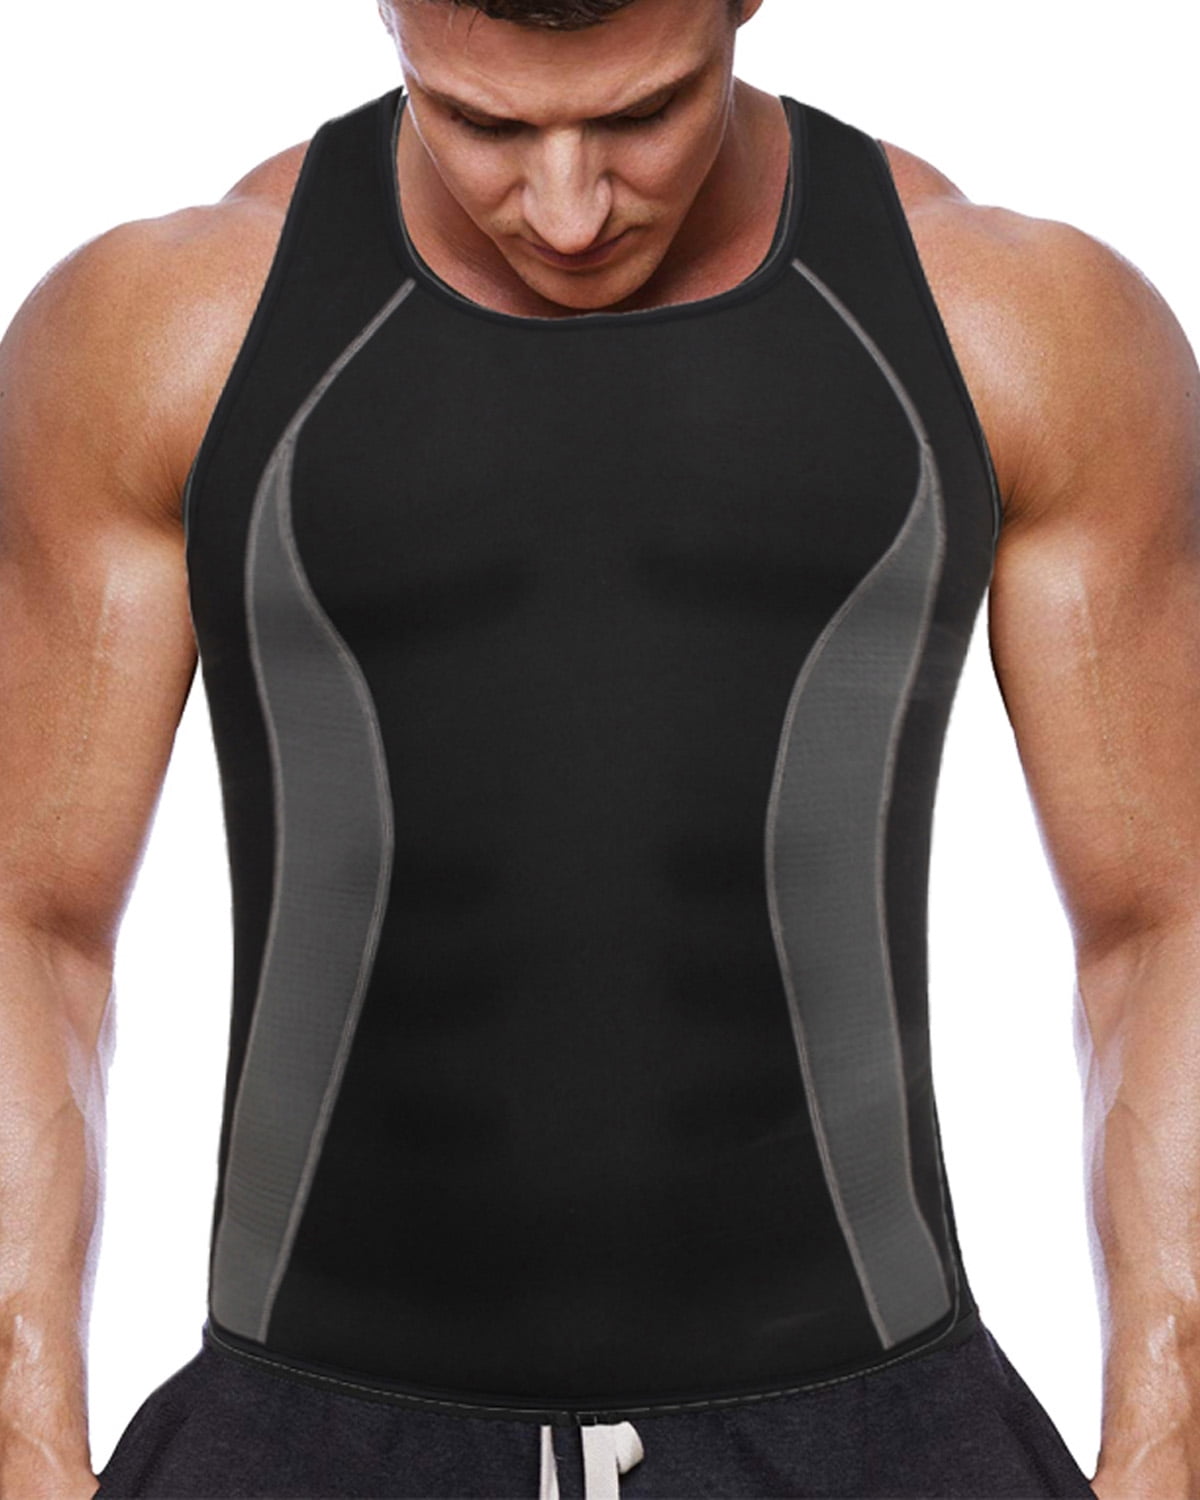 Men's Body Shaper Waist Trainer Sweat Workout Tank Top Sauna Vest Neoprene Sport 